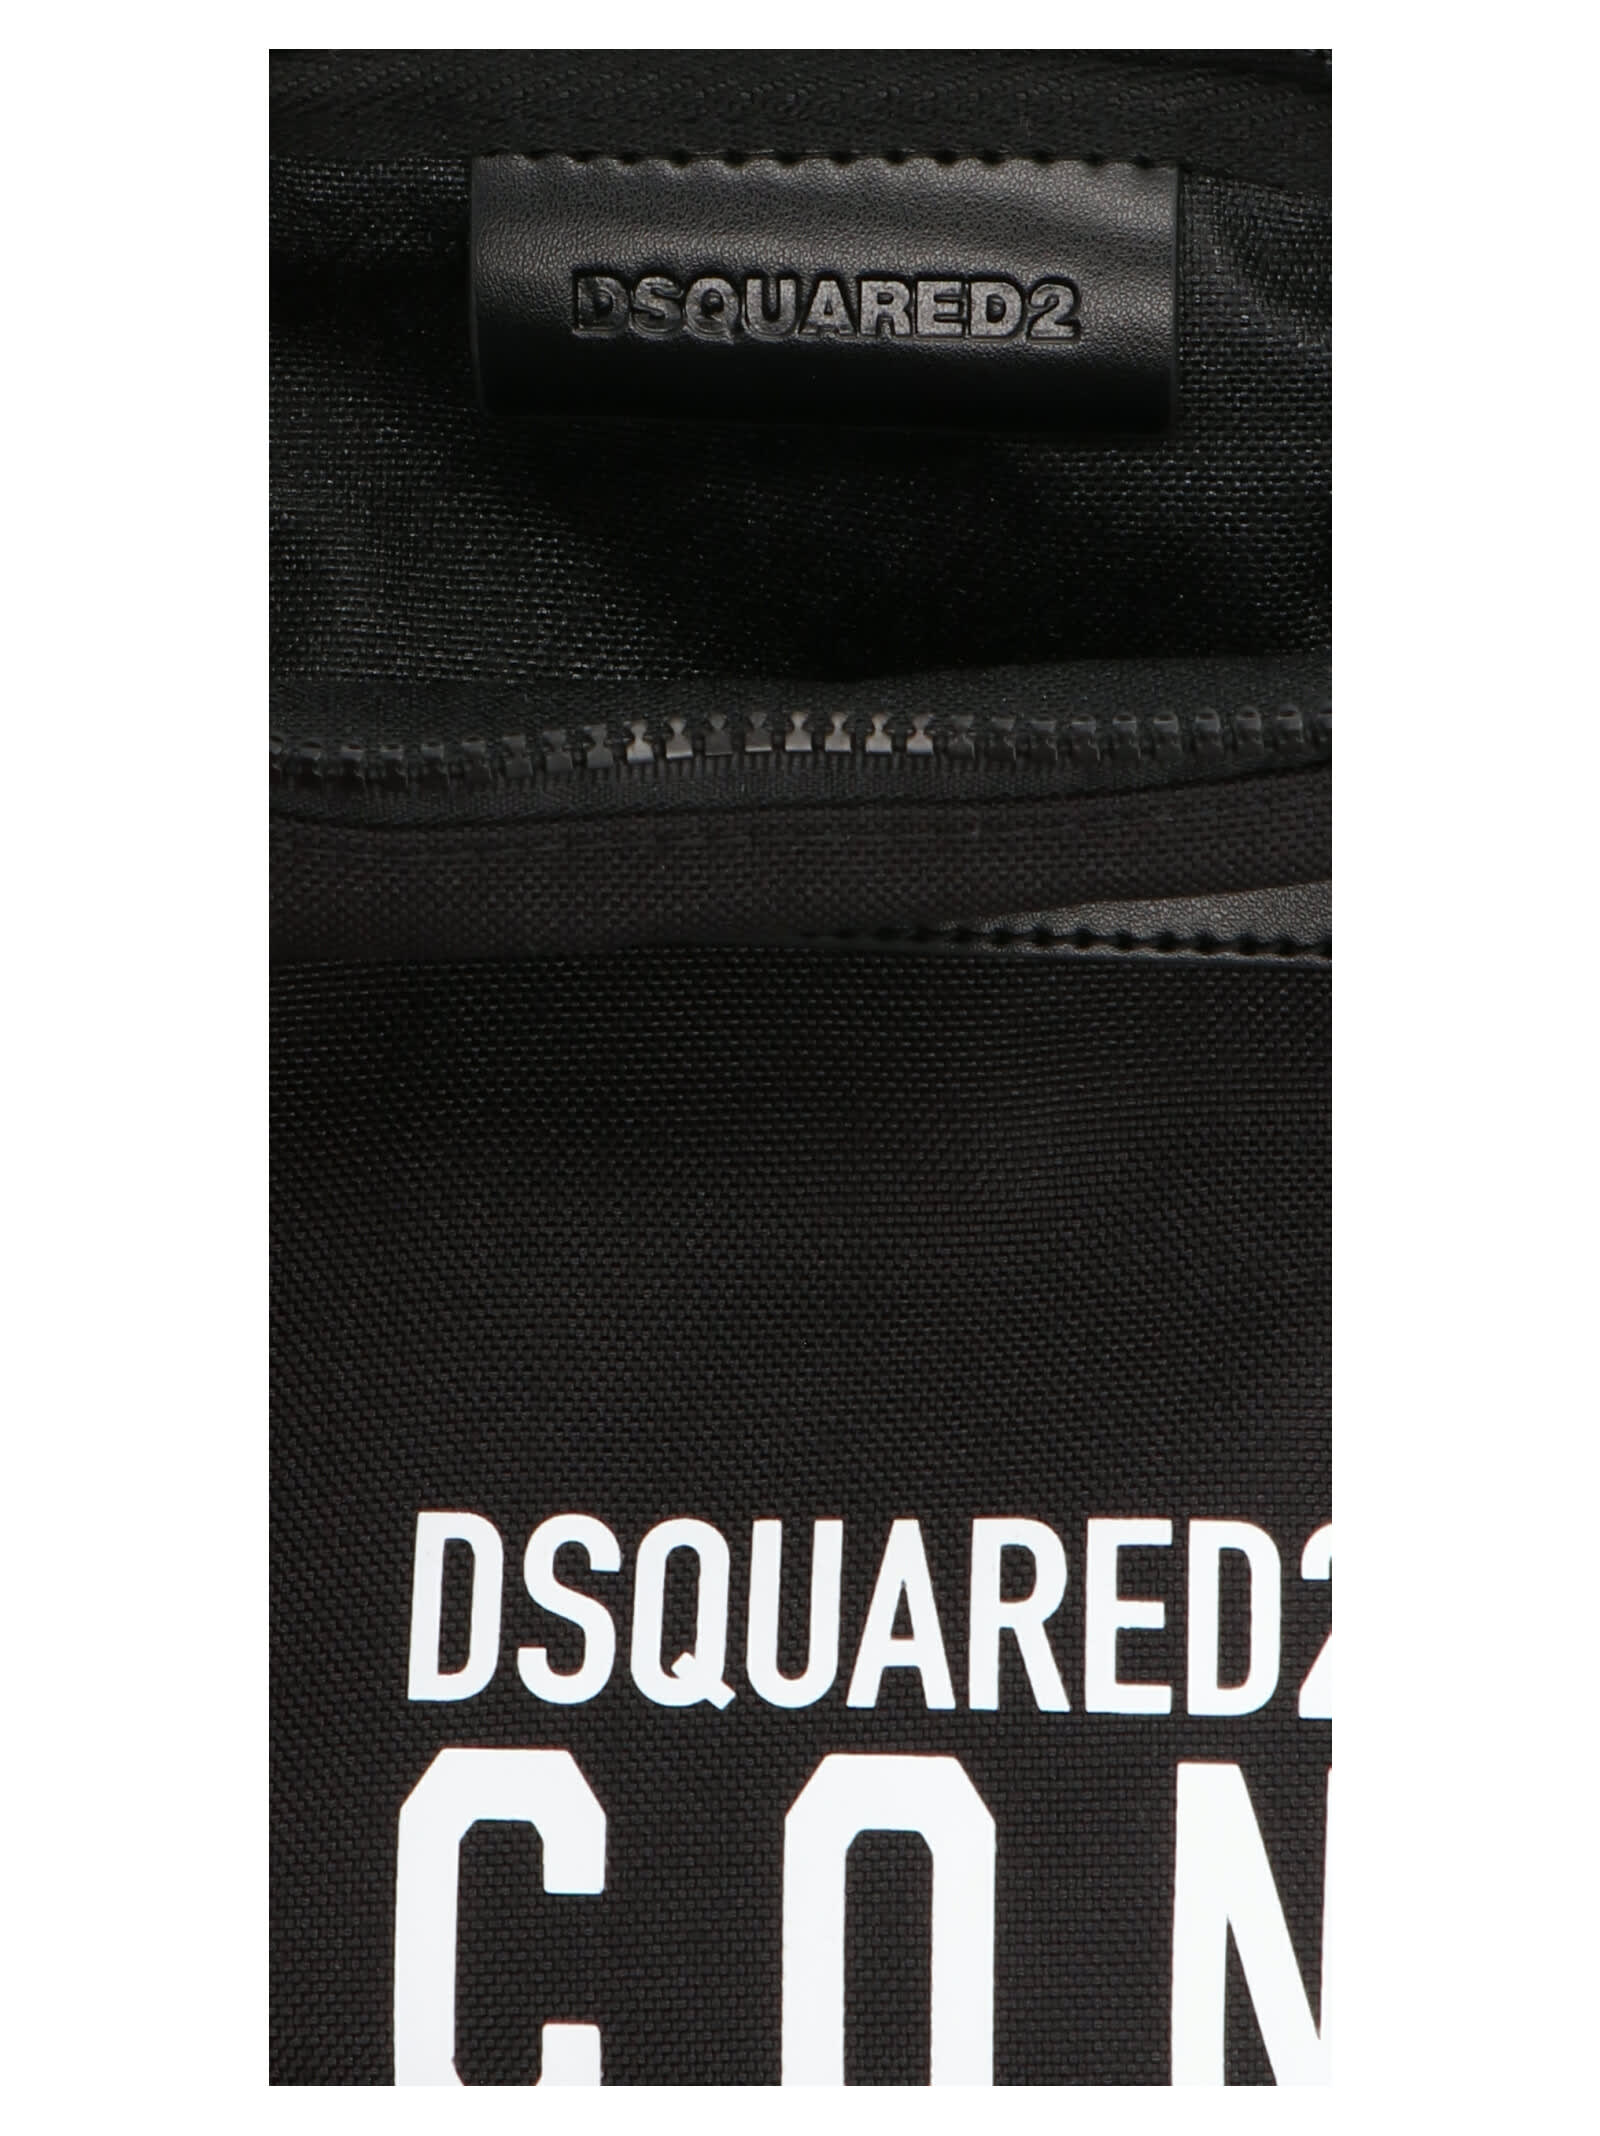 Dsquared2 Shoulder Bags | italist 